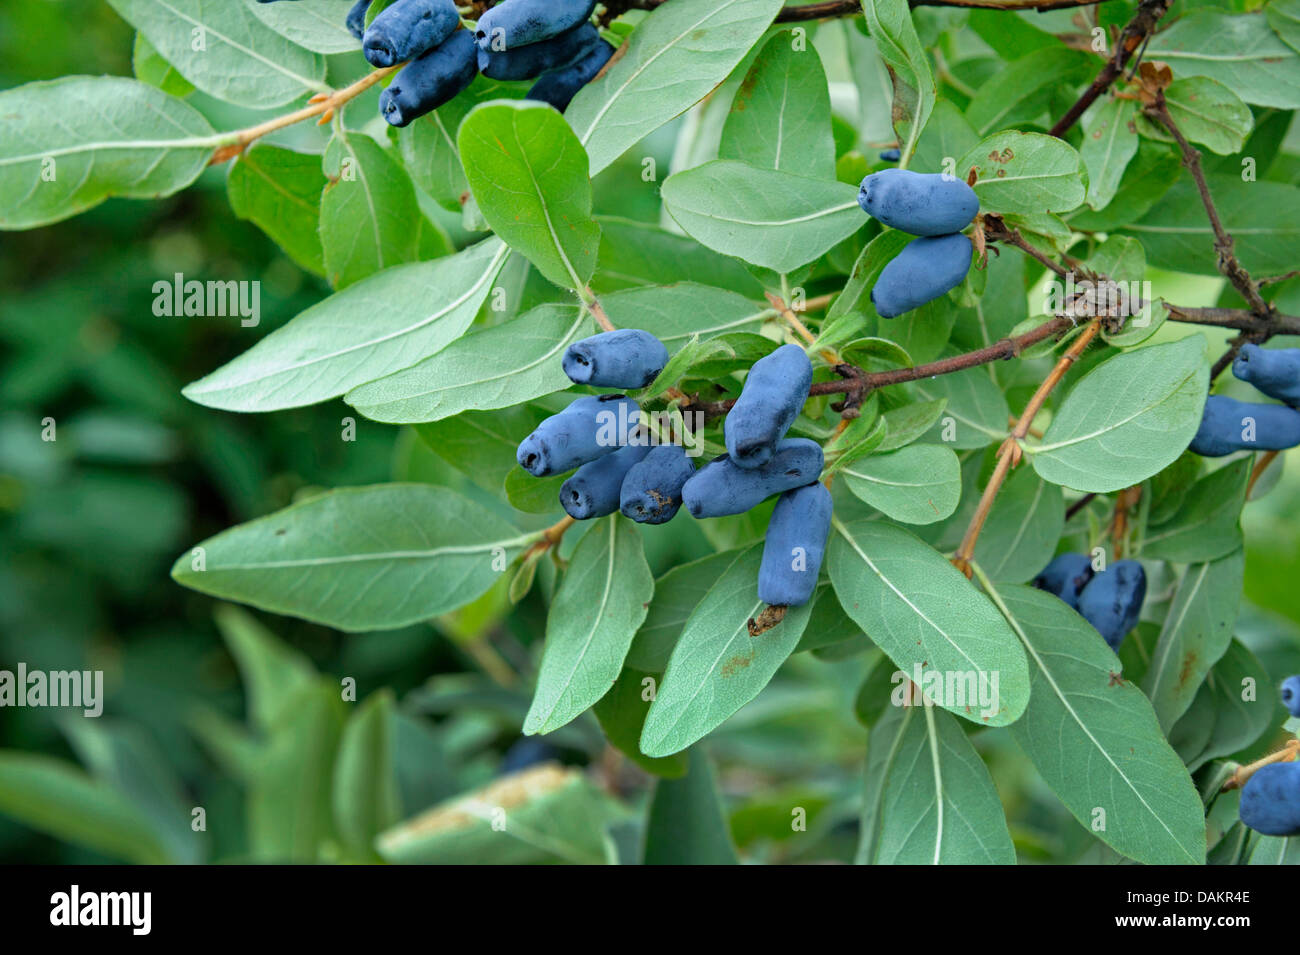 Blue-berried honeysuckle, Bluefly honeysuckle, Sweetberry honeysuckle (Lonicera caerulea var. kamtschatica), branch with fruits Stock Photo